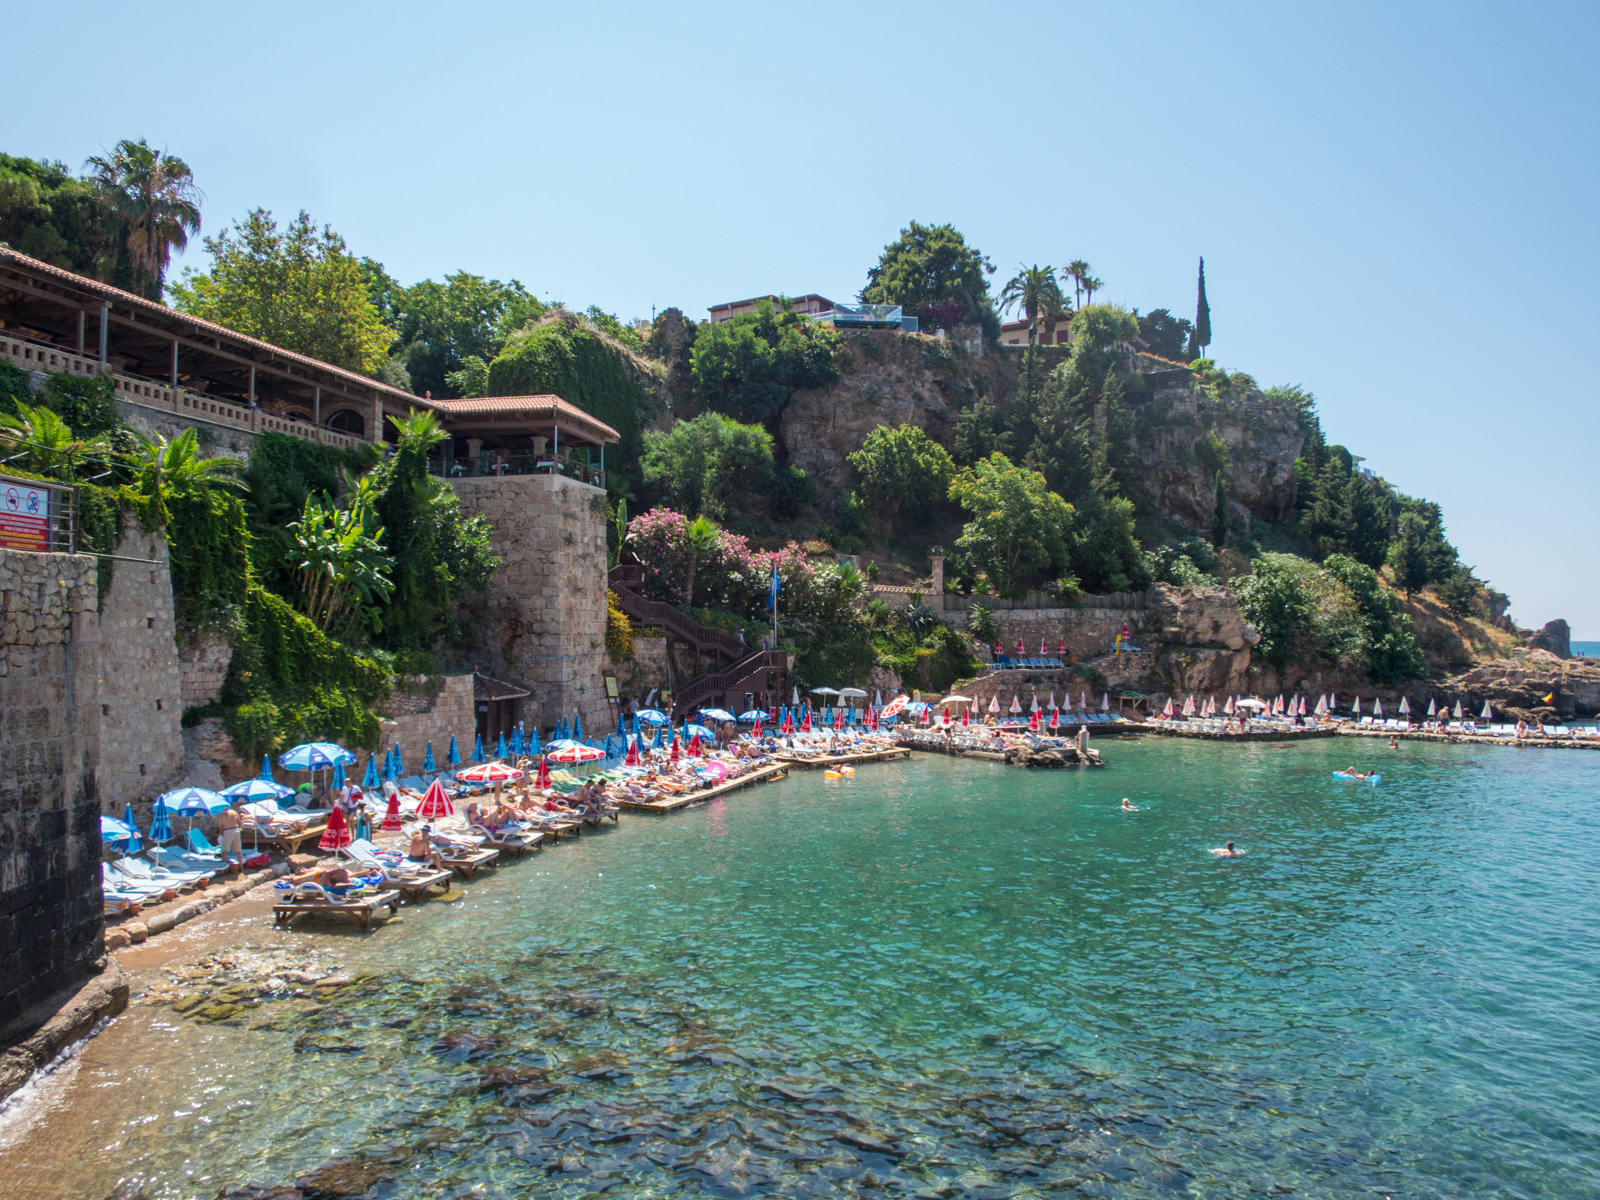 Mermerli beach in Antalya, the largest city in the Turkish Riviera